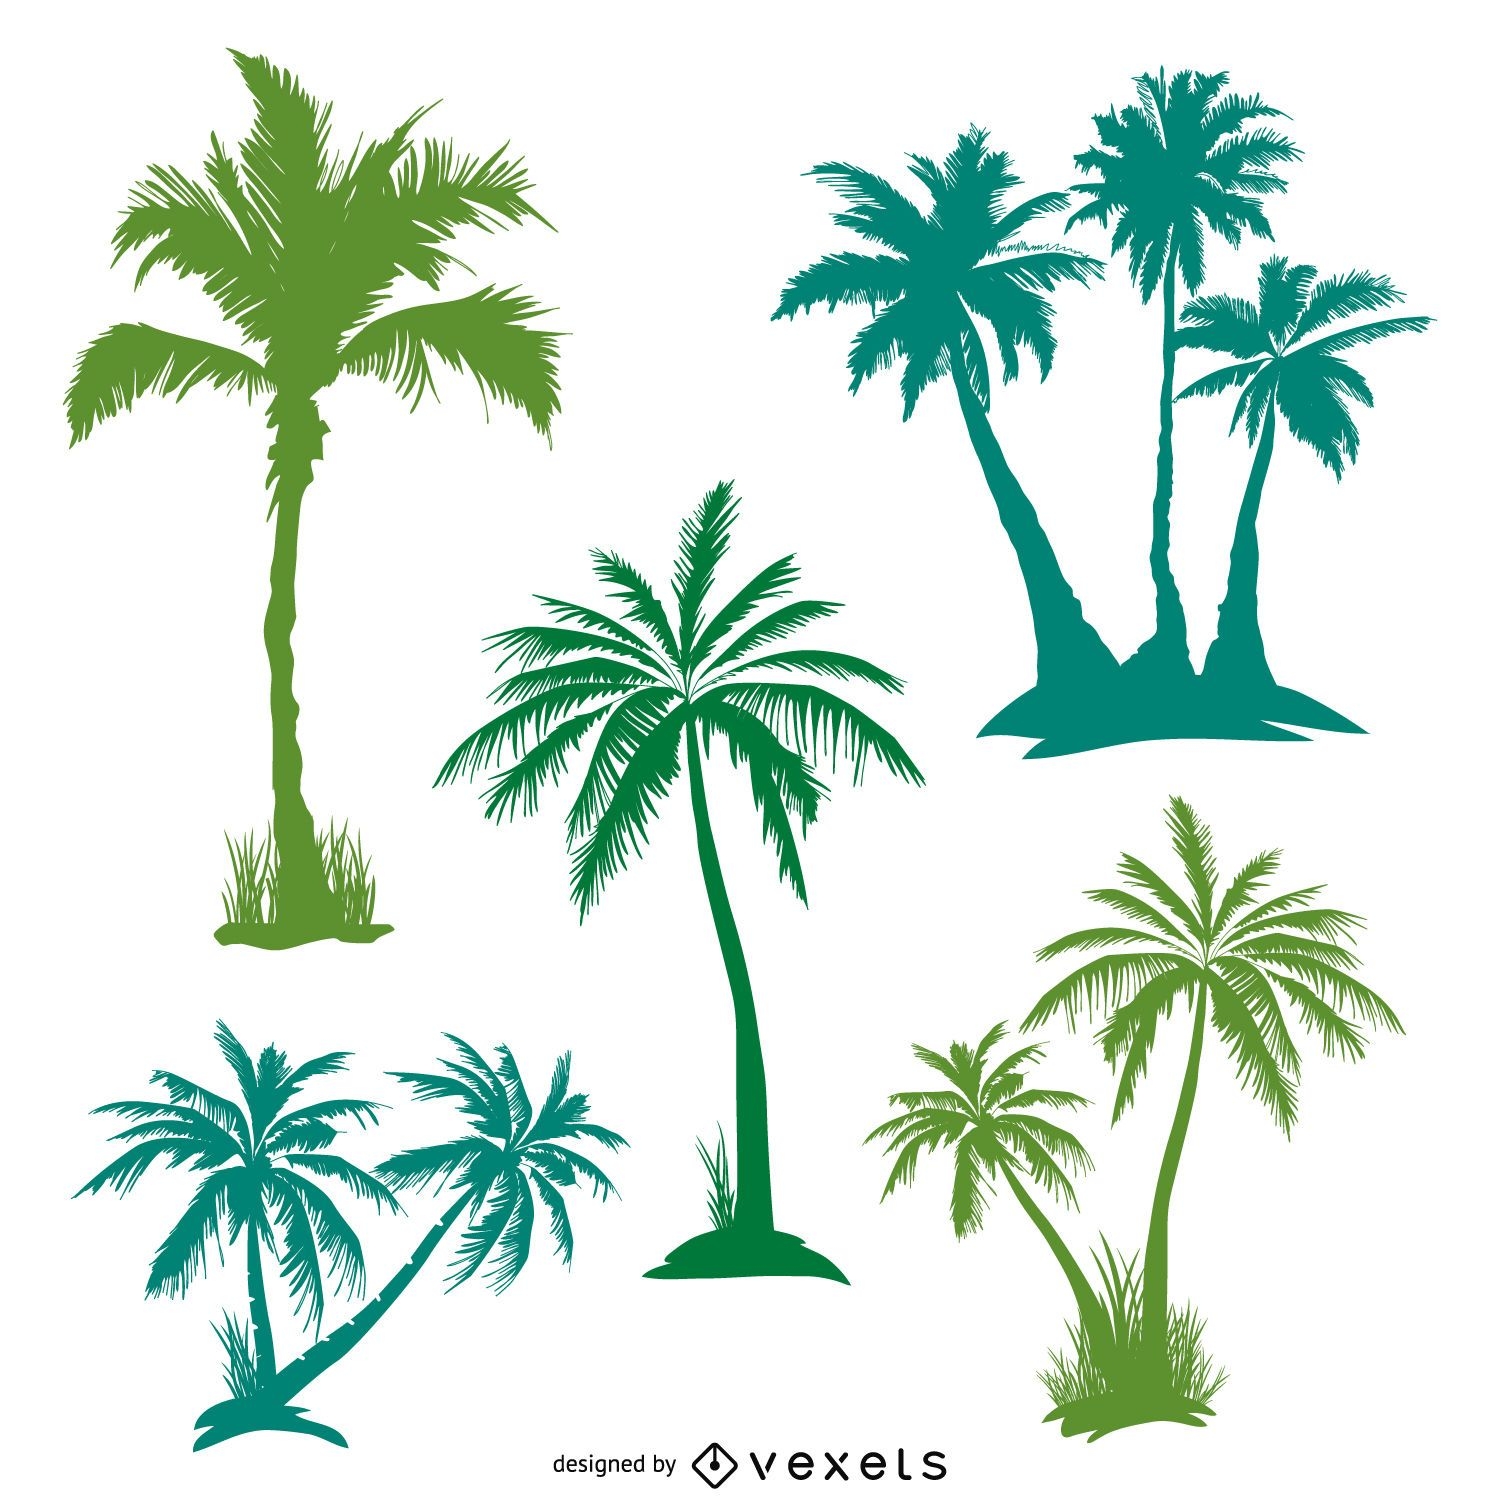 Green palm trees set